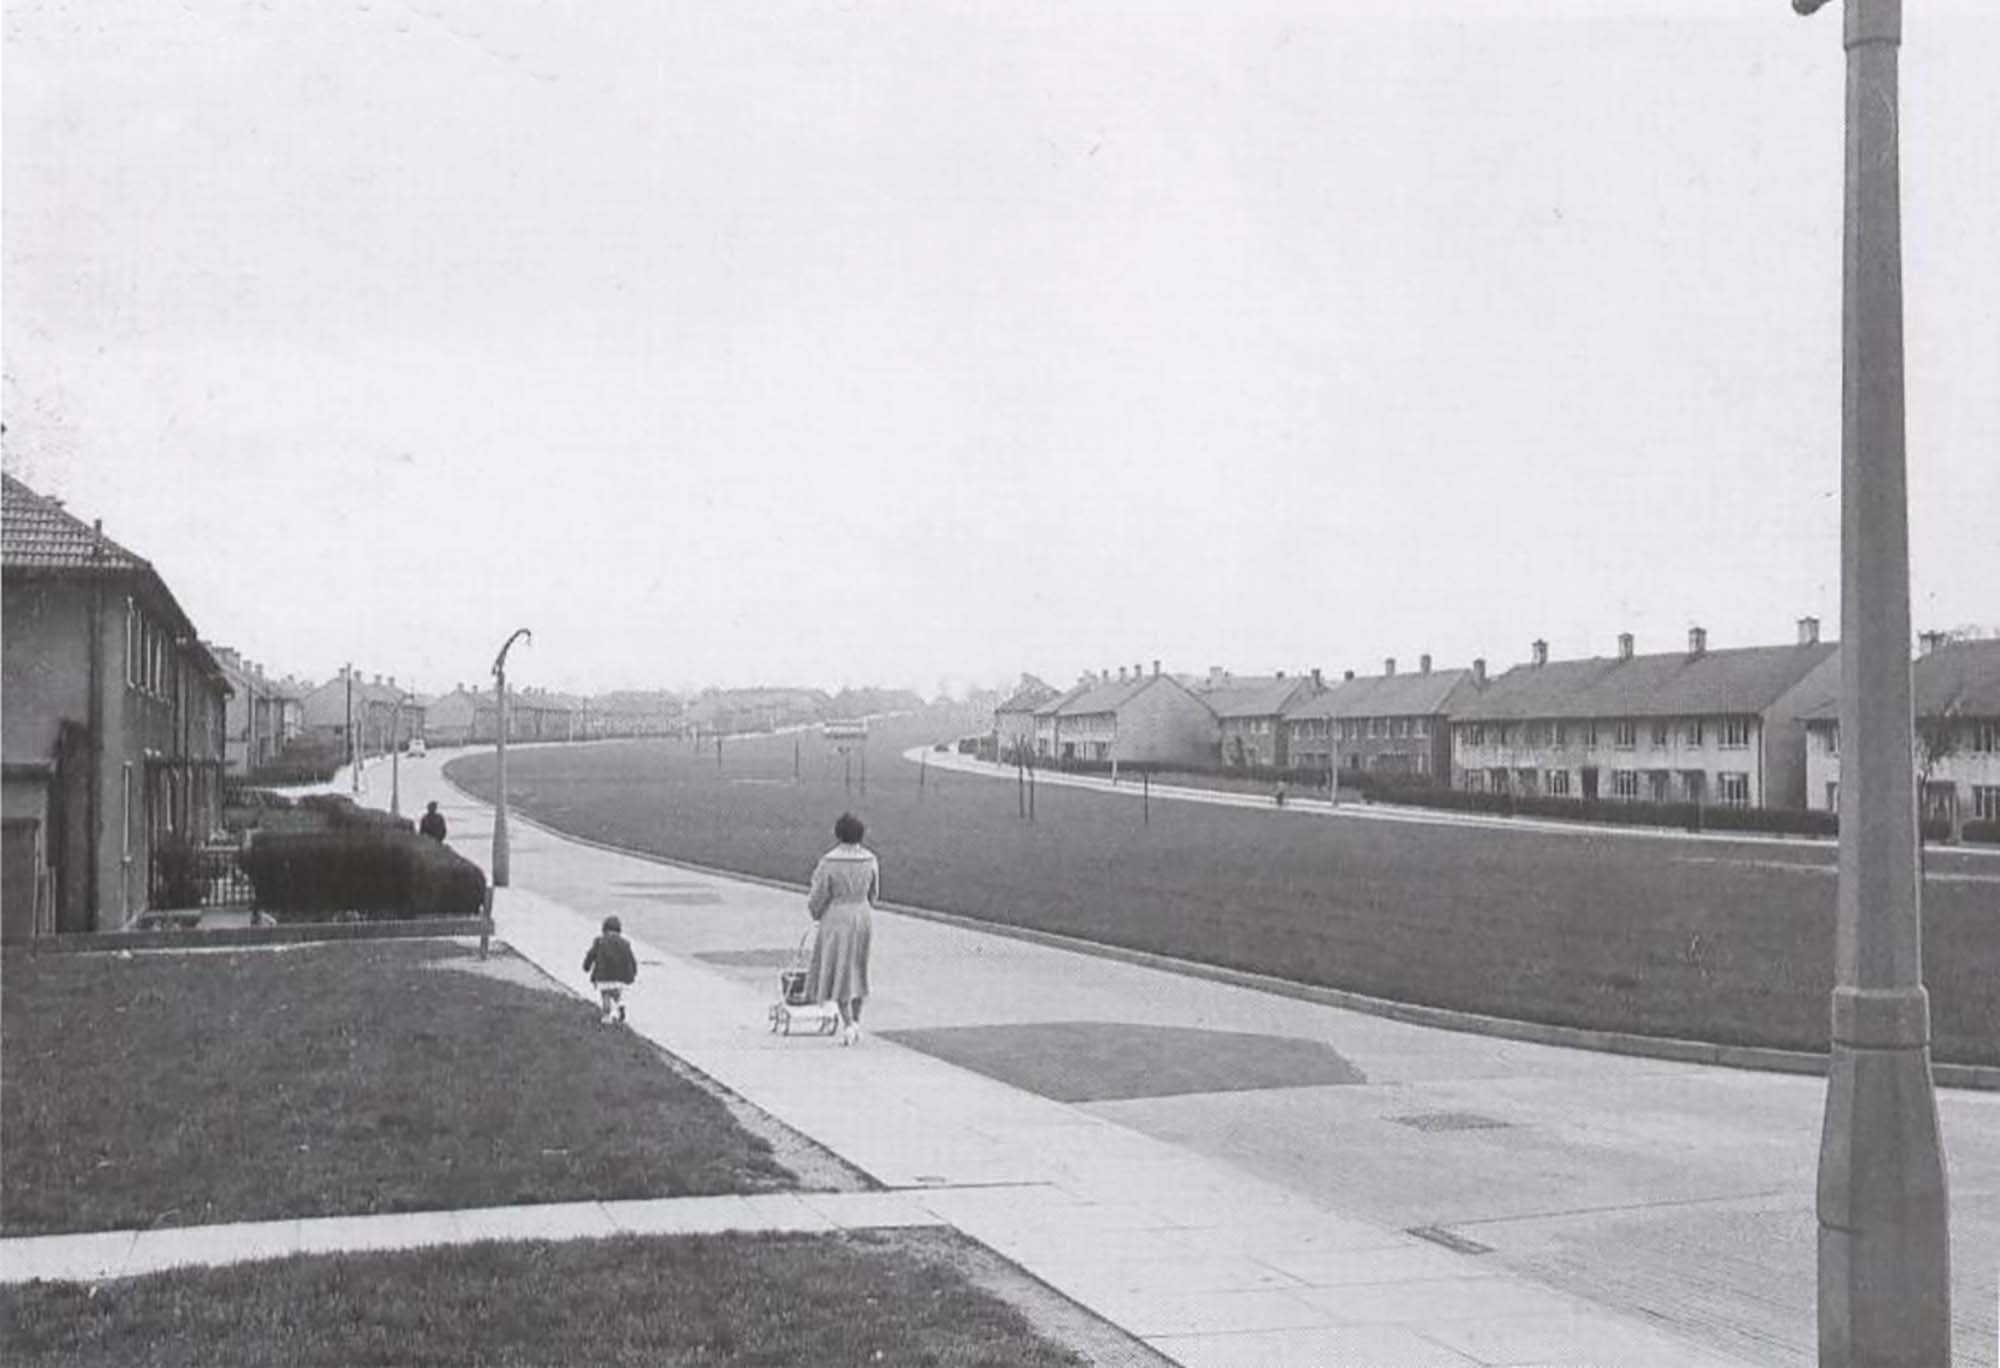 Glenhills Boulevard on the Eyres Monsell Estate, 1959 - 